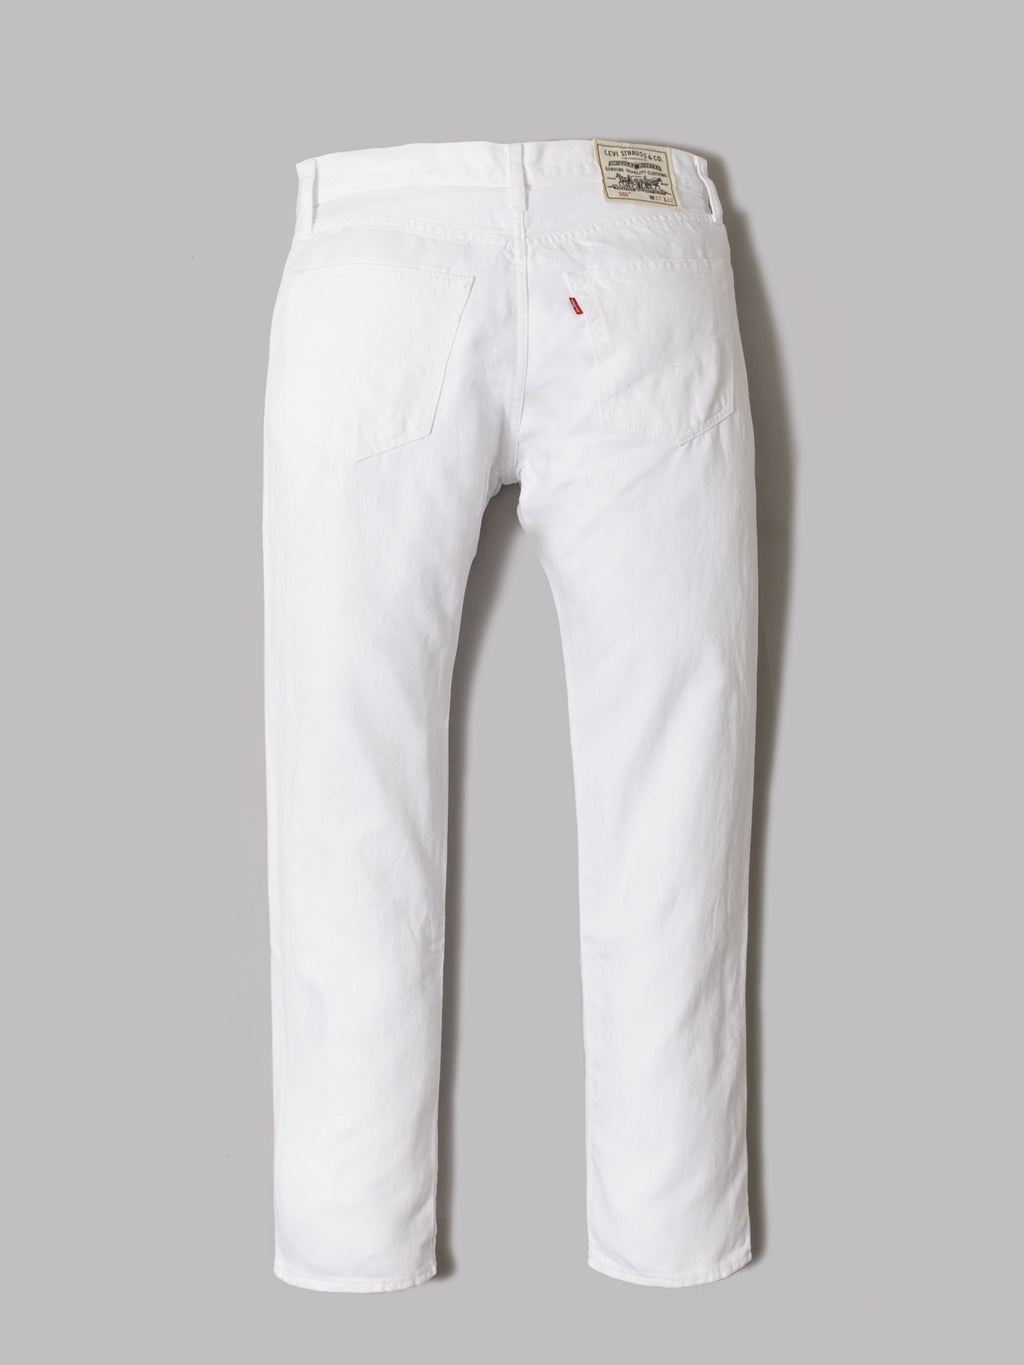 Levi's 502 White Jeans France, SAVE 34% 